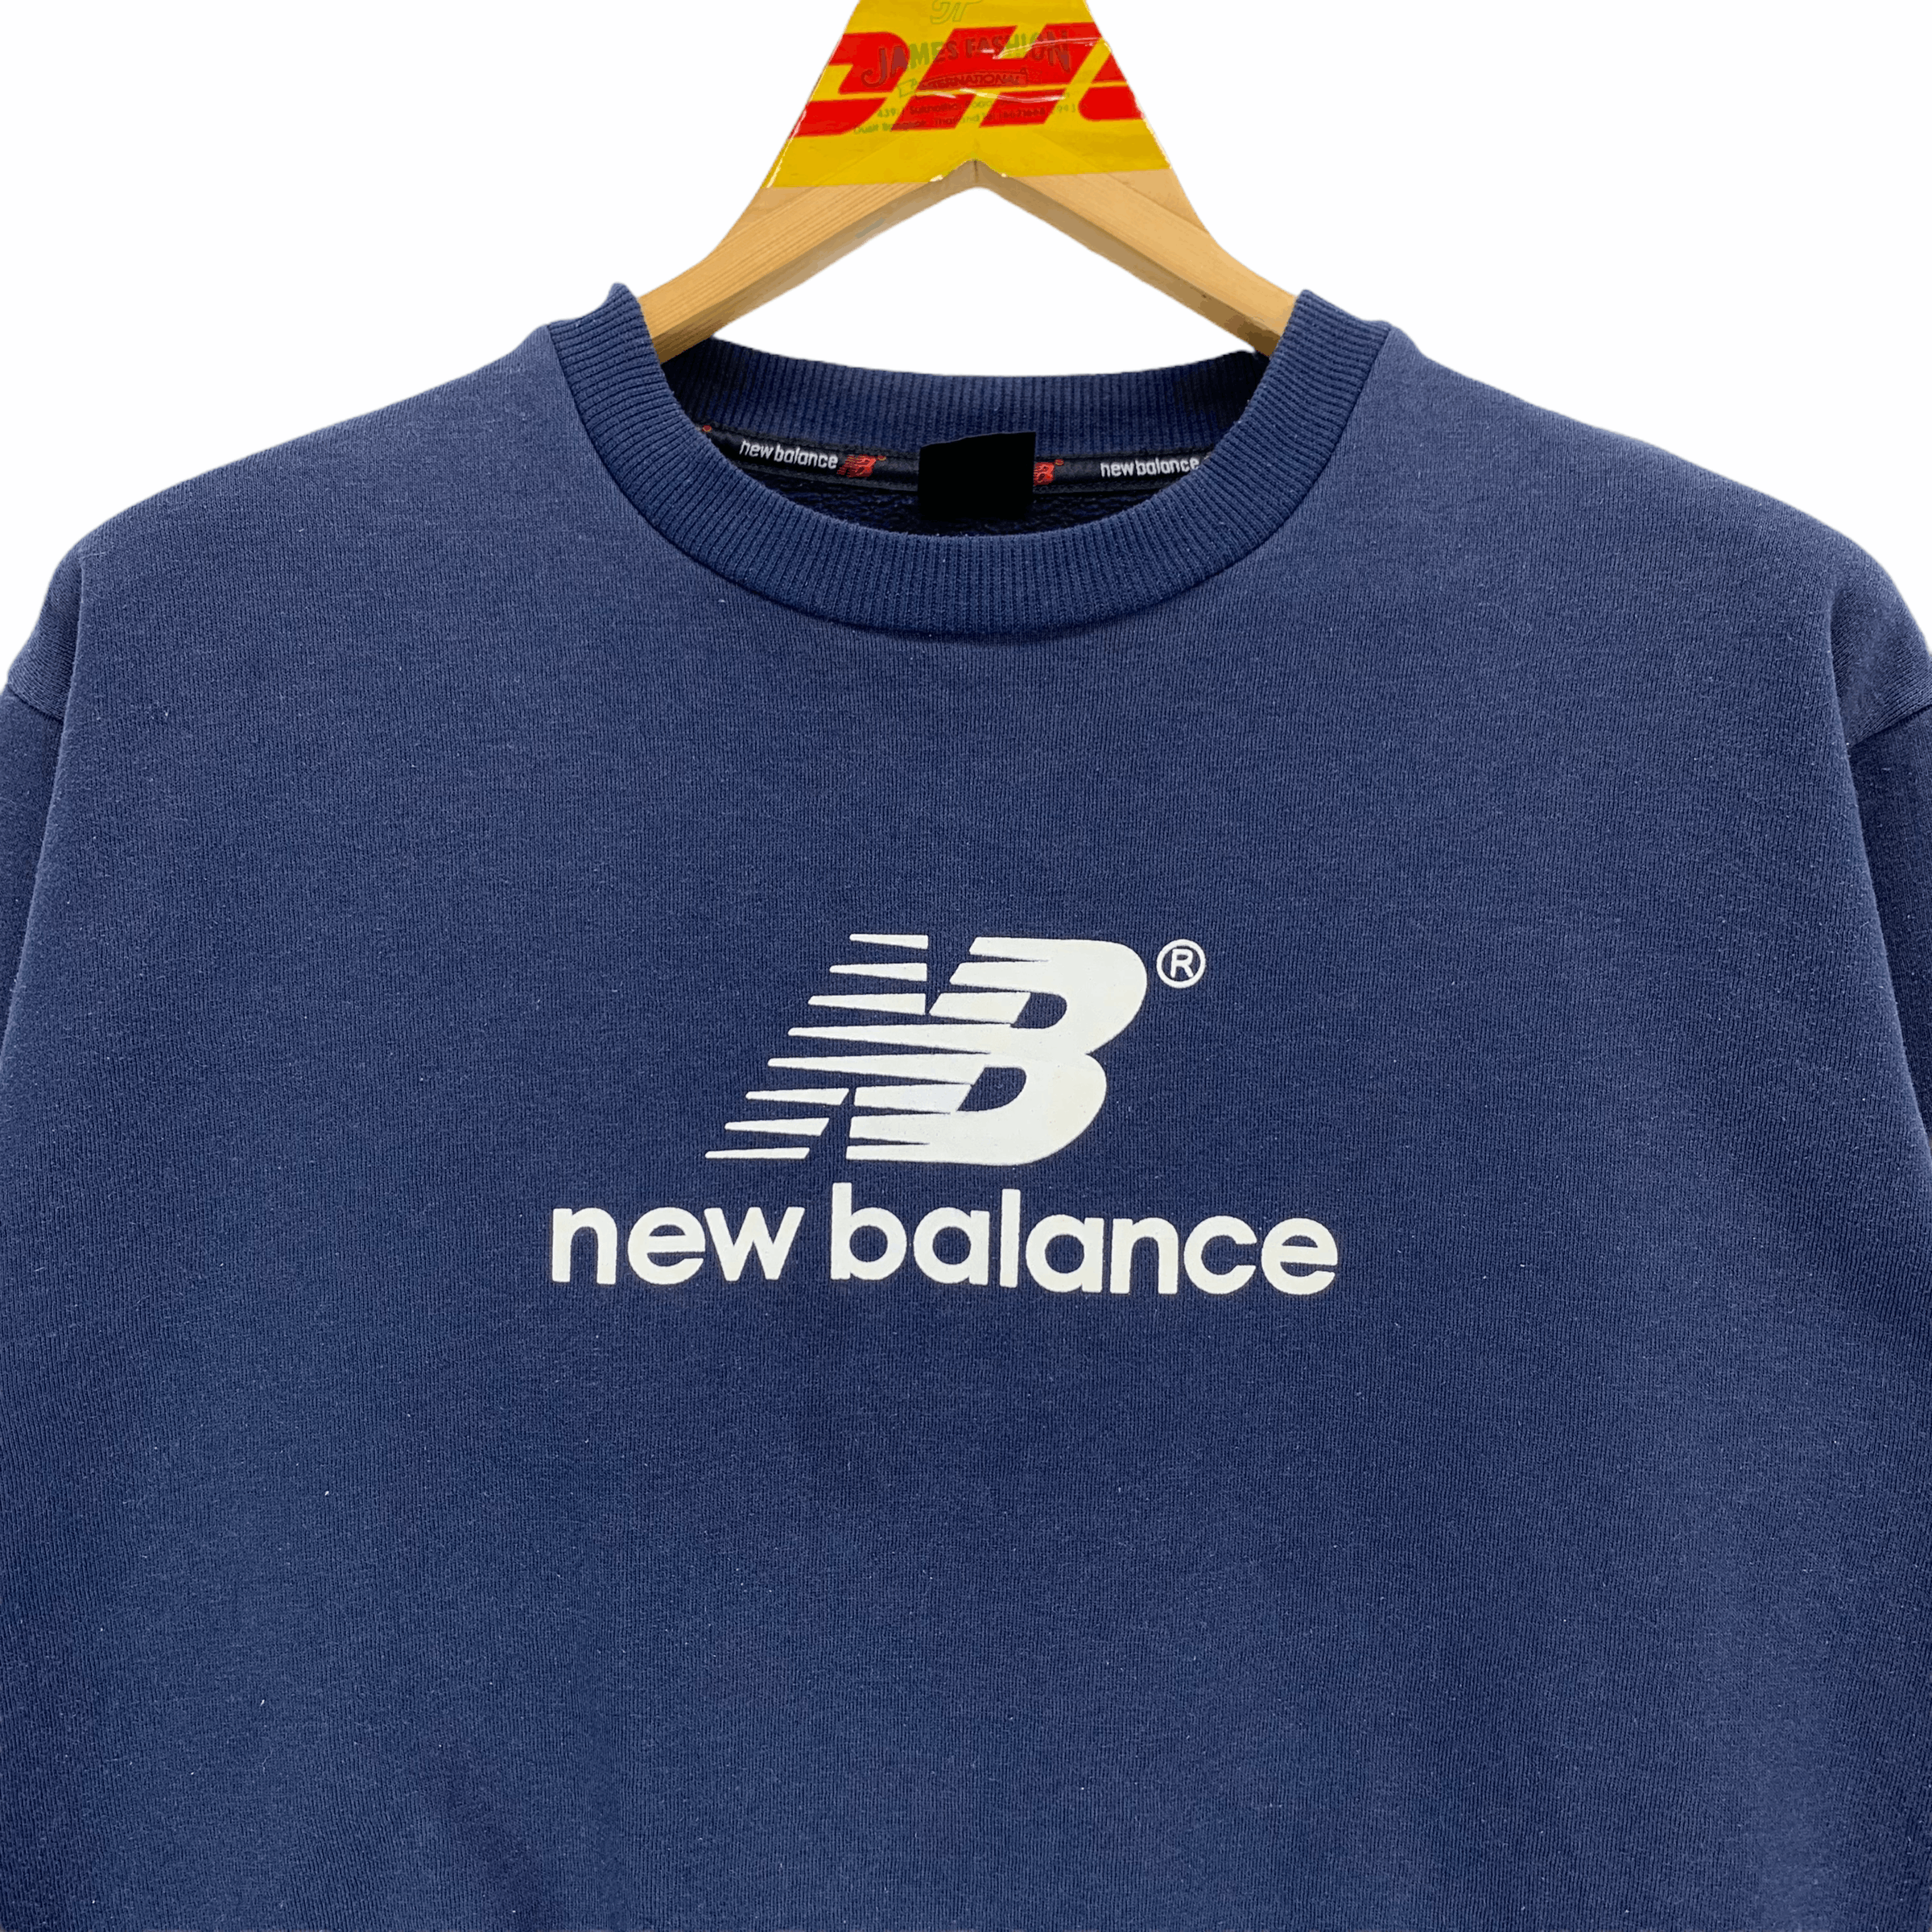 New Balance Big Logo Crew Neck Sweatshirt #2991-112 - 2